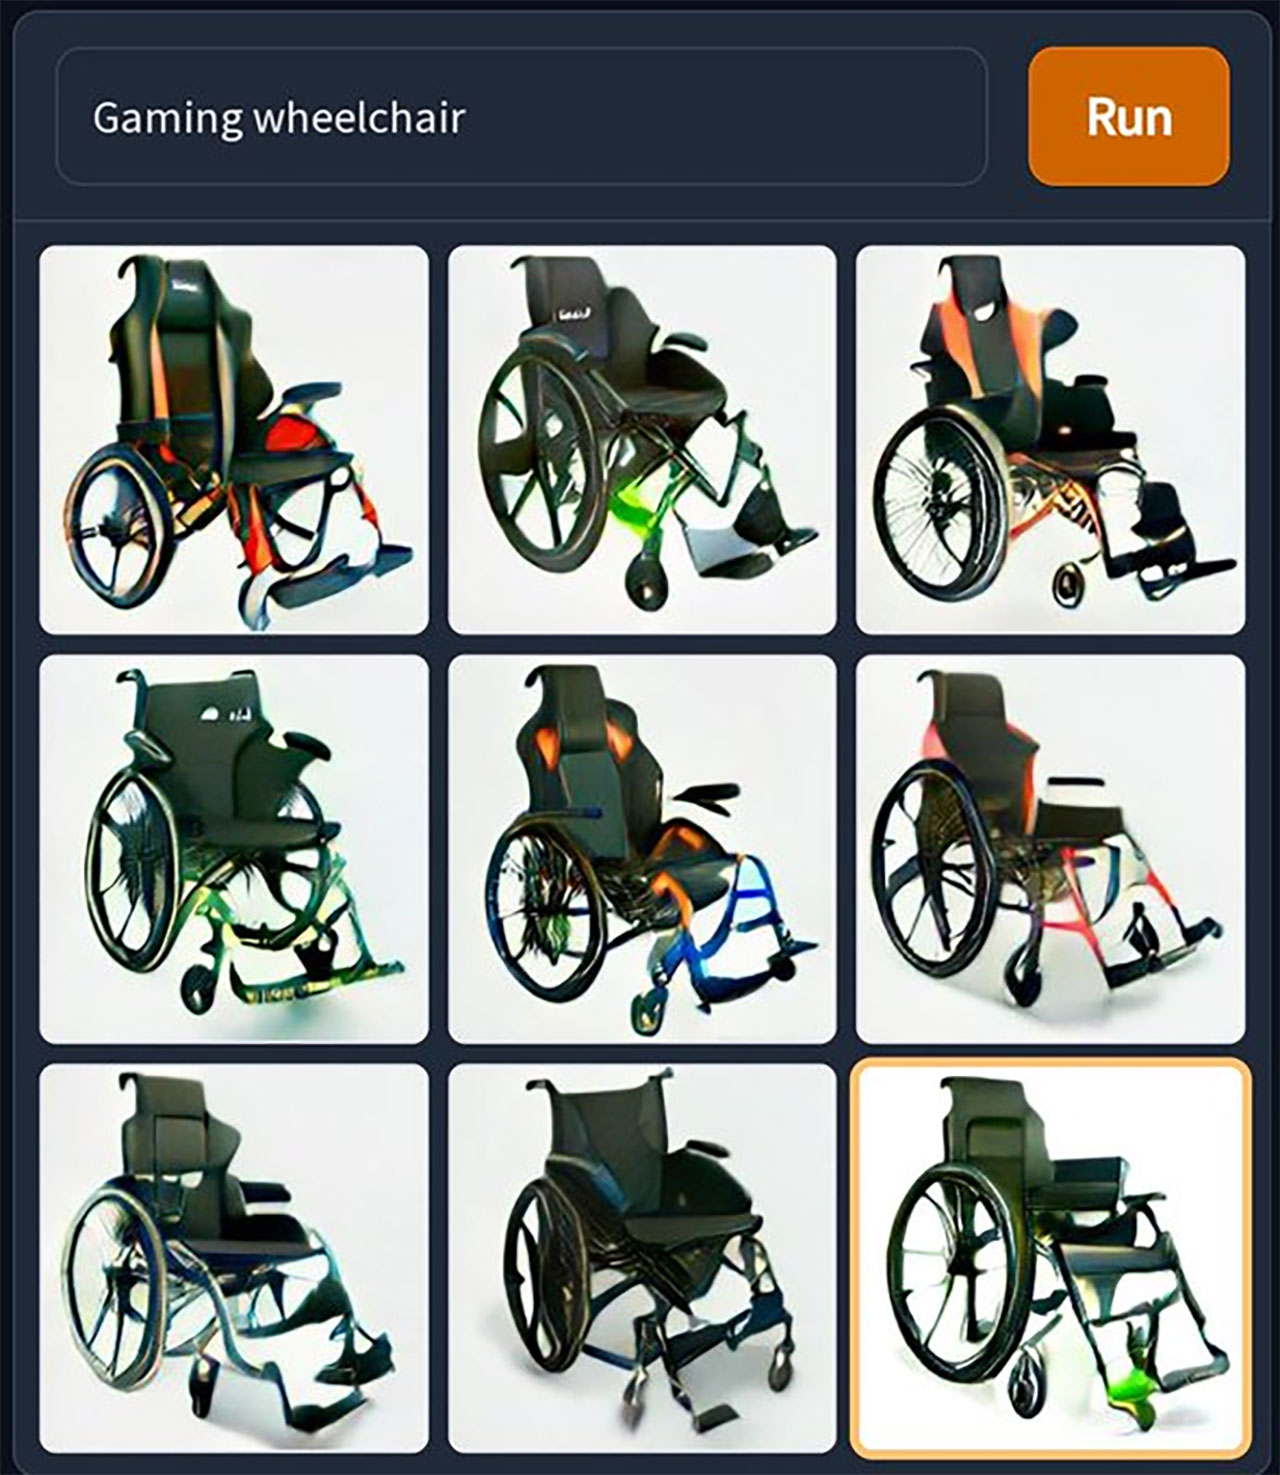 Gaming Wheelchair